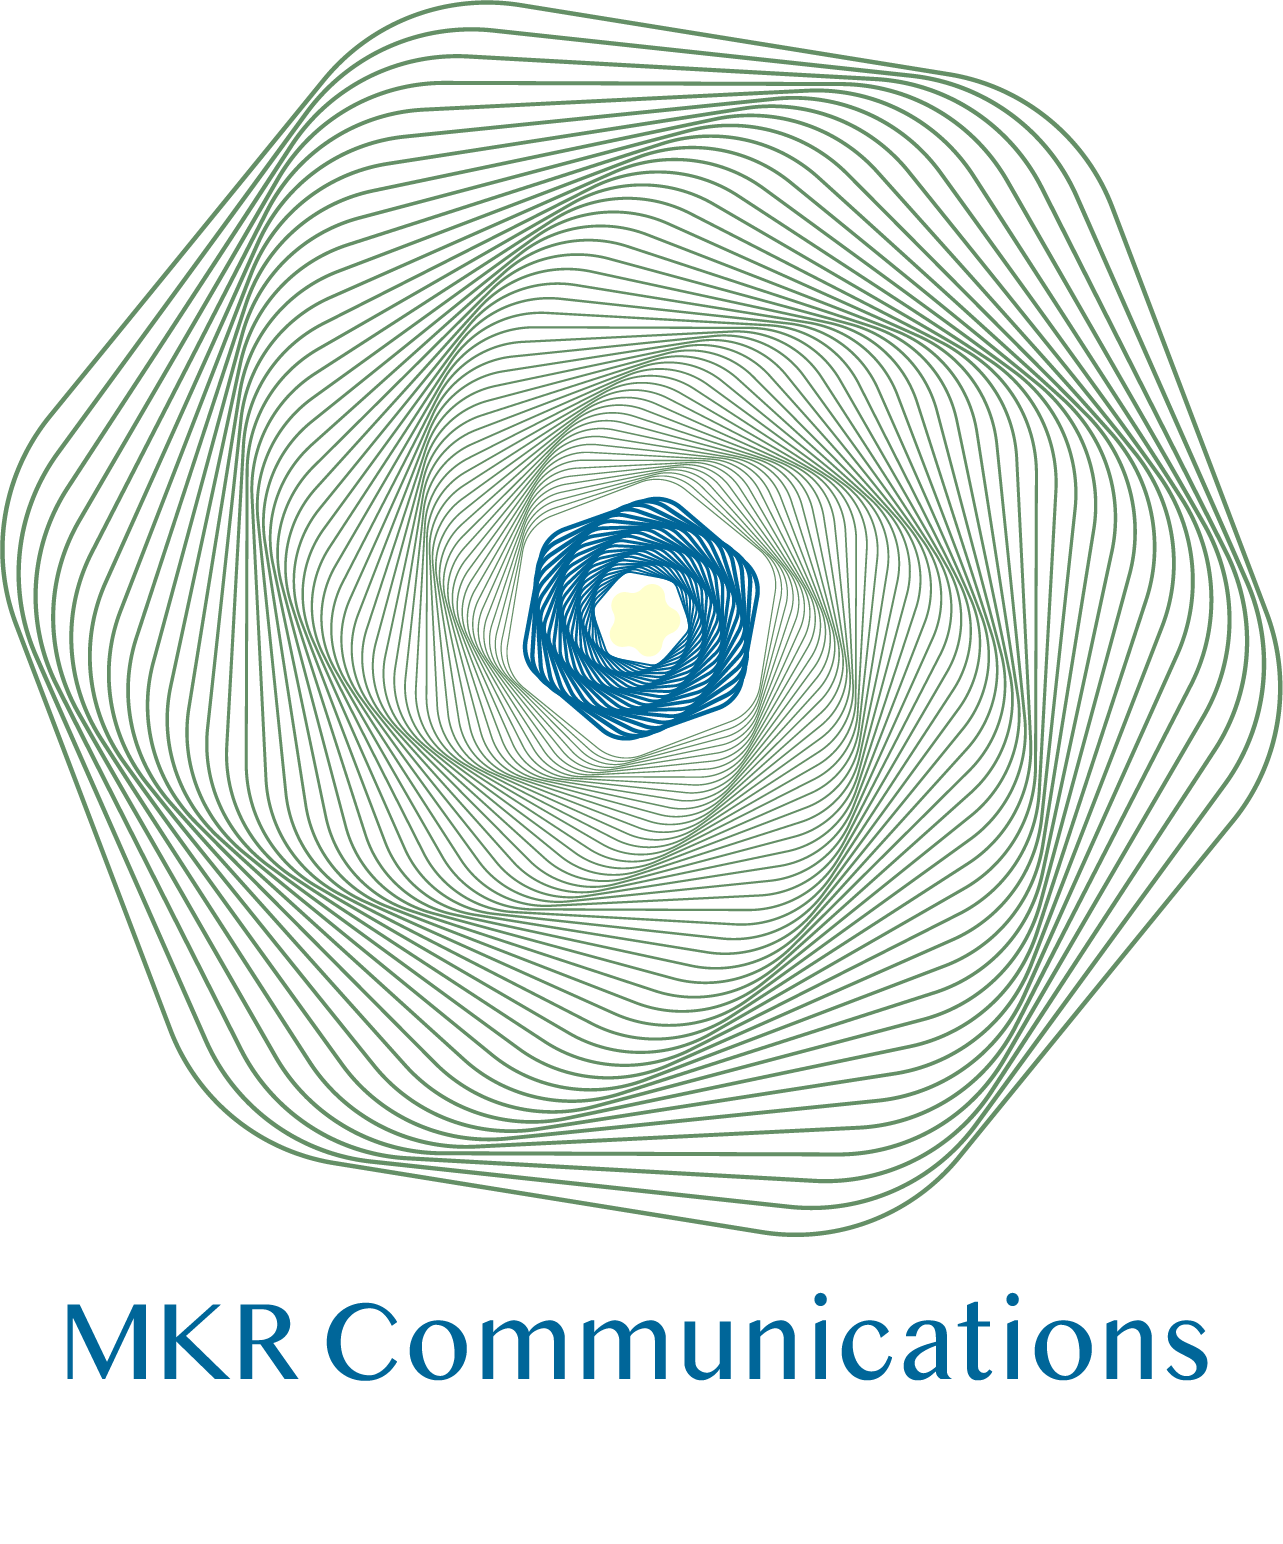 MKR Communications